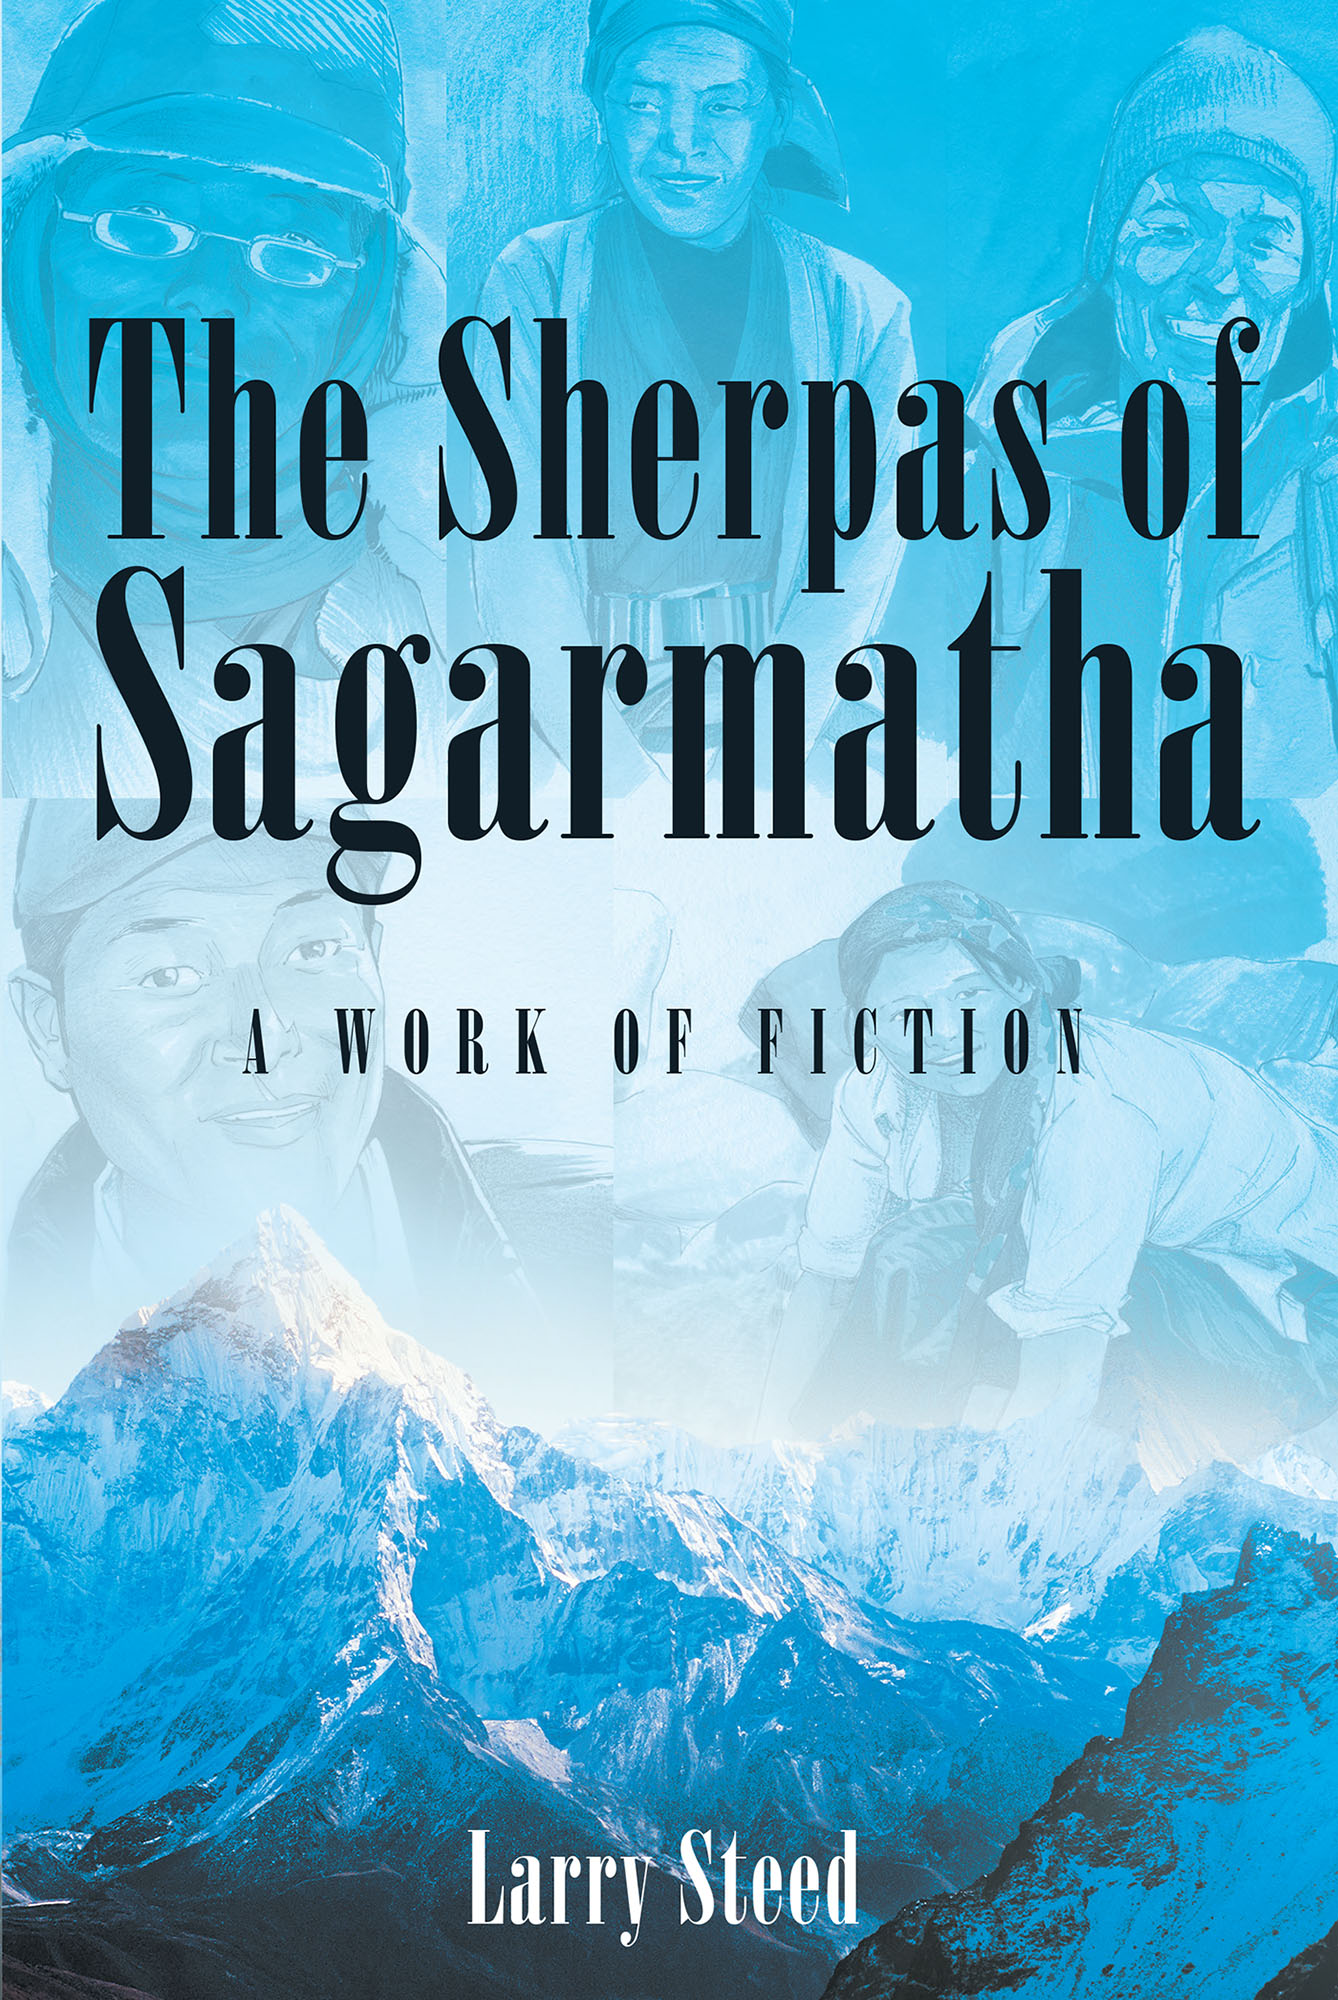 The Sherpas of Sagarmatha Cover Image